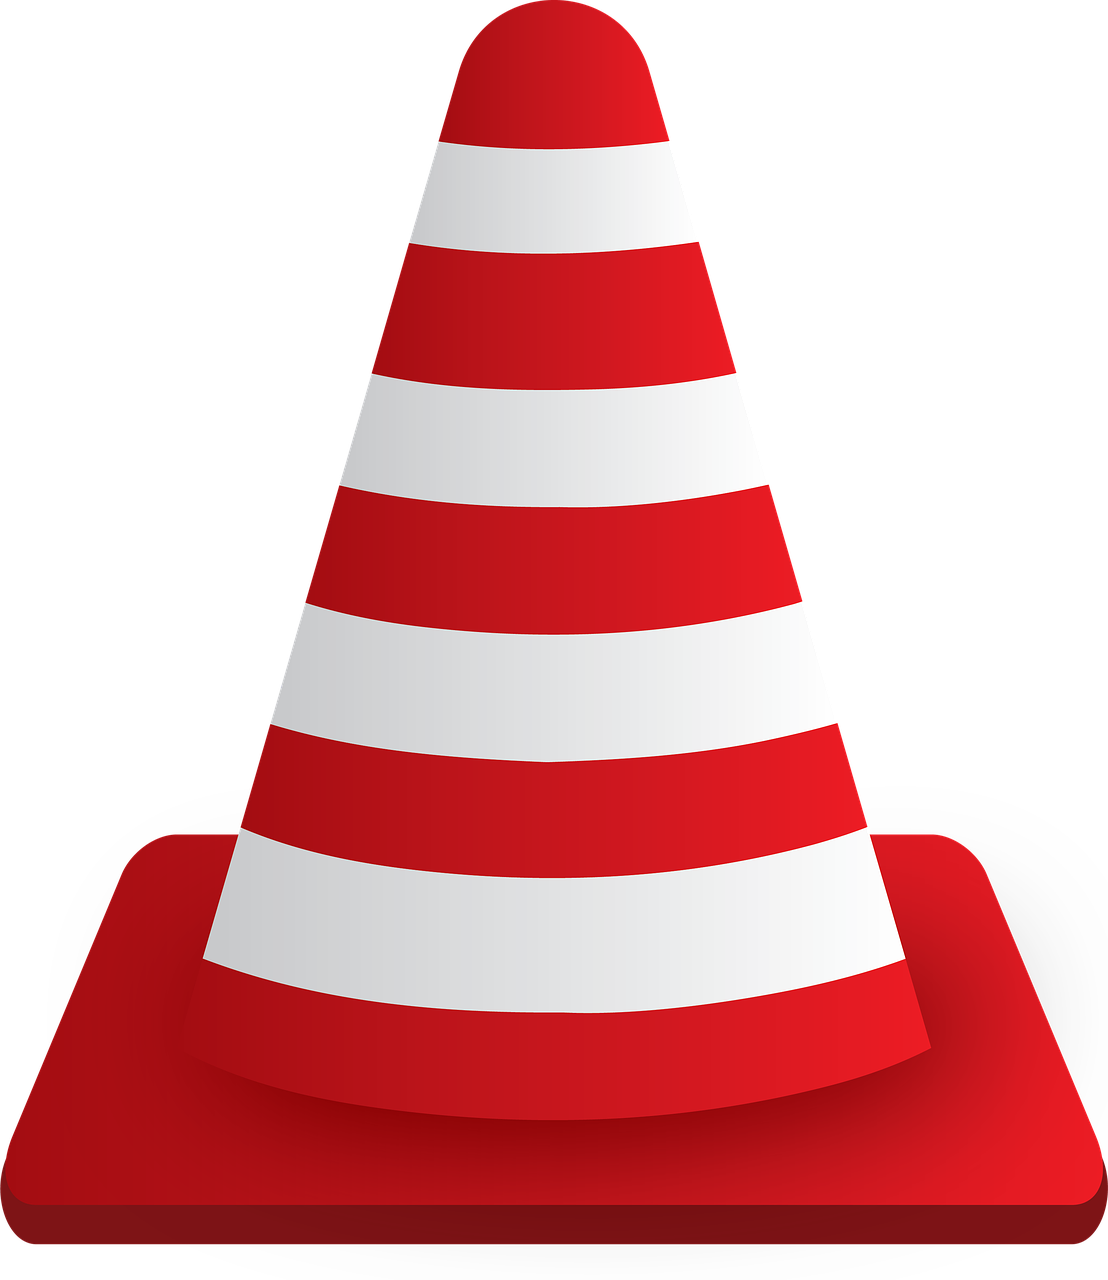 sign cone symbol free photo